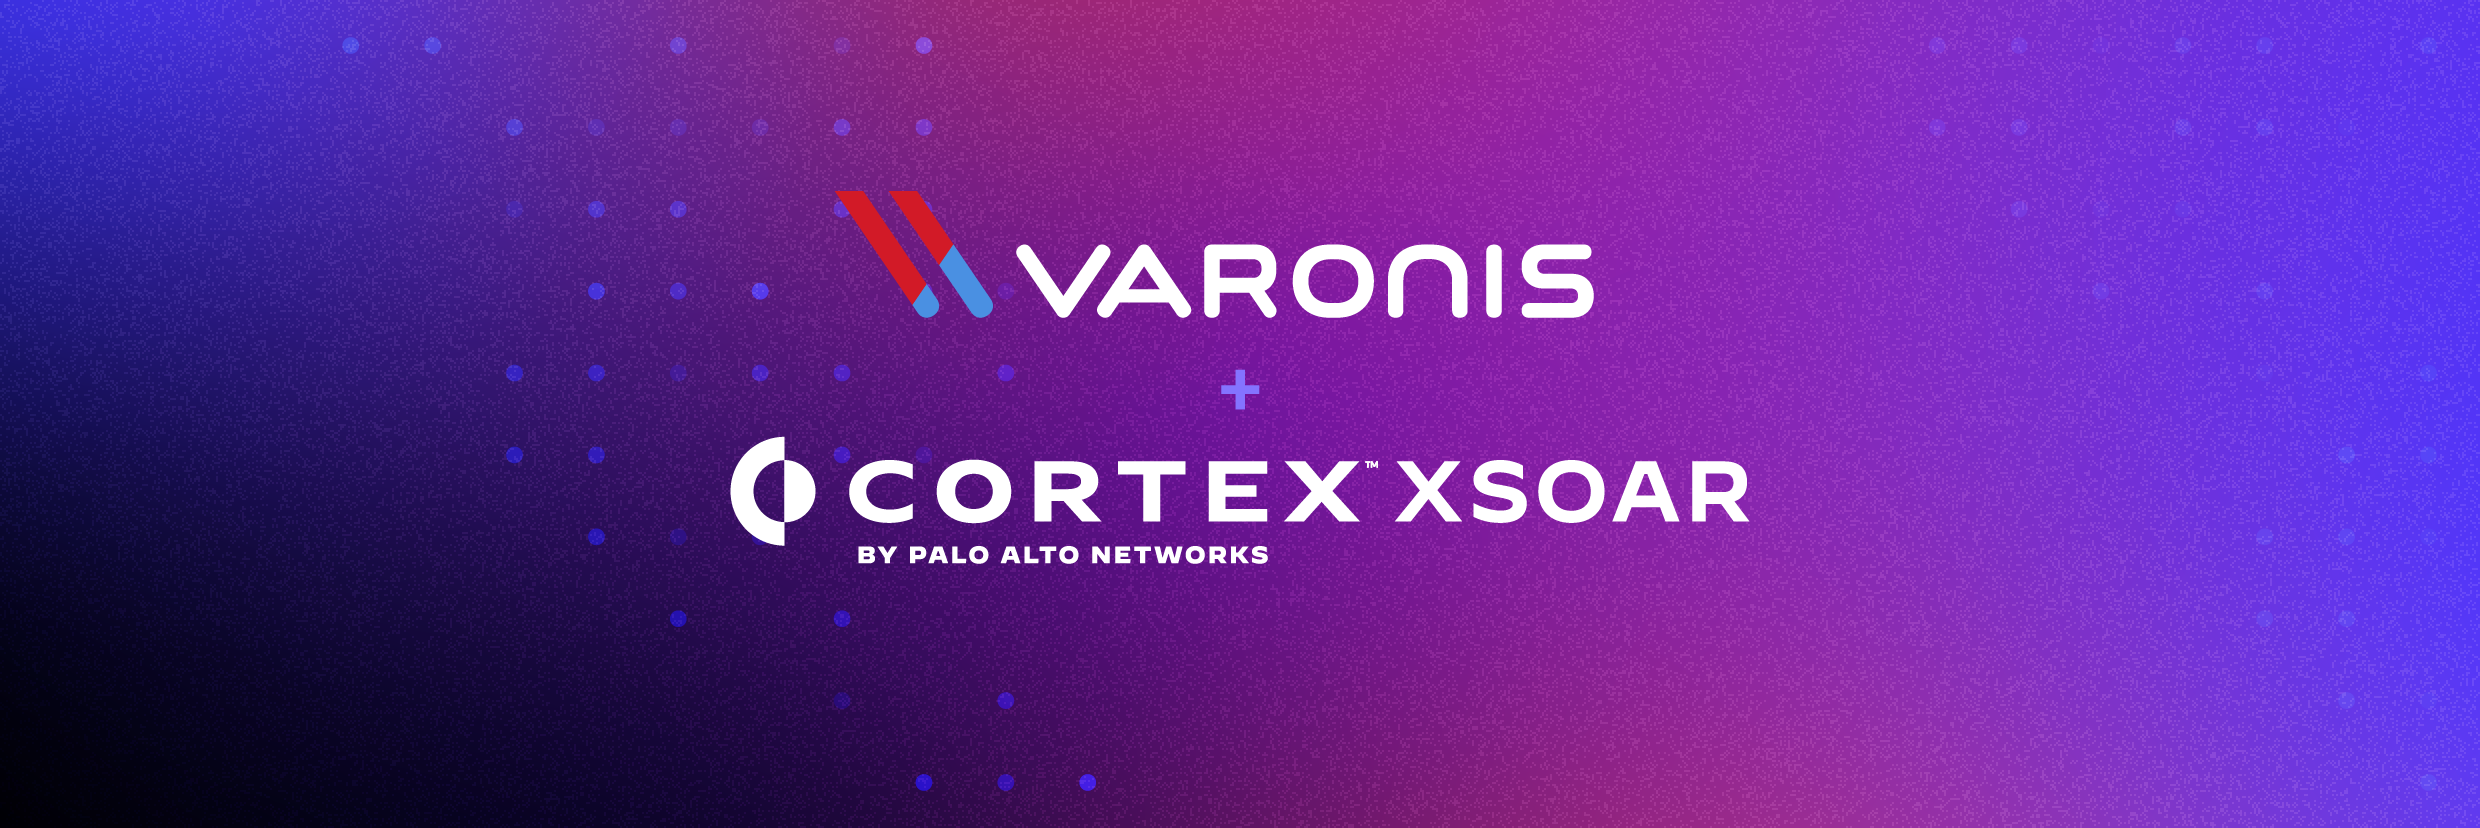 Varonis e Cortex XSOAR